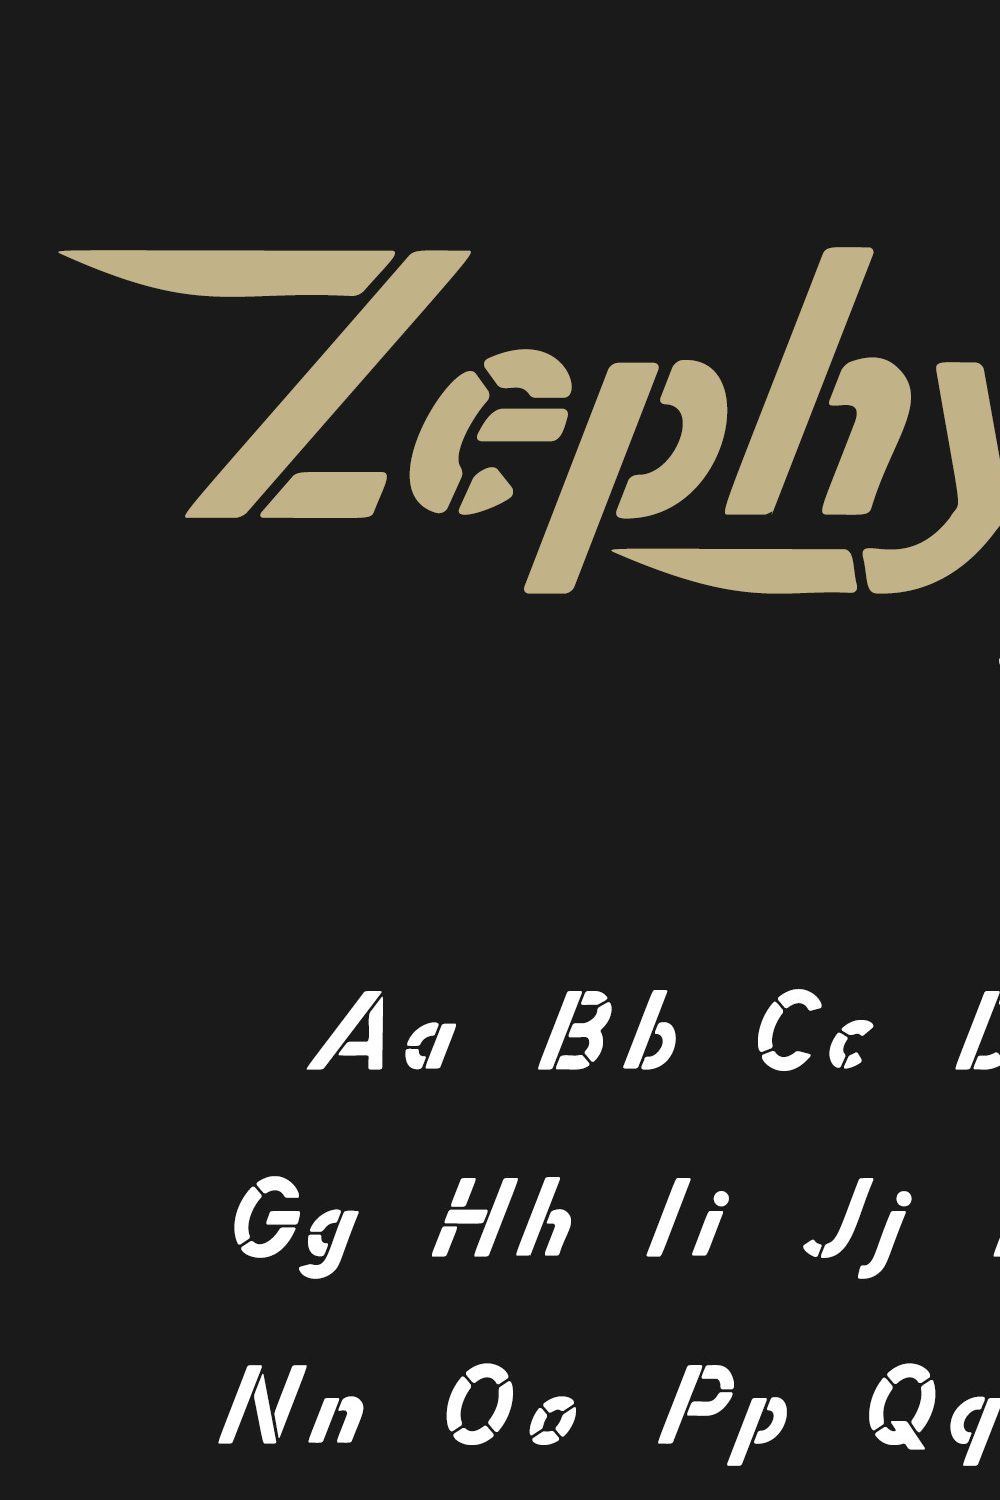 Zephyr Stencil pinterest preview image.